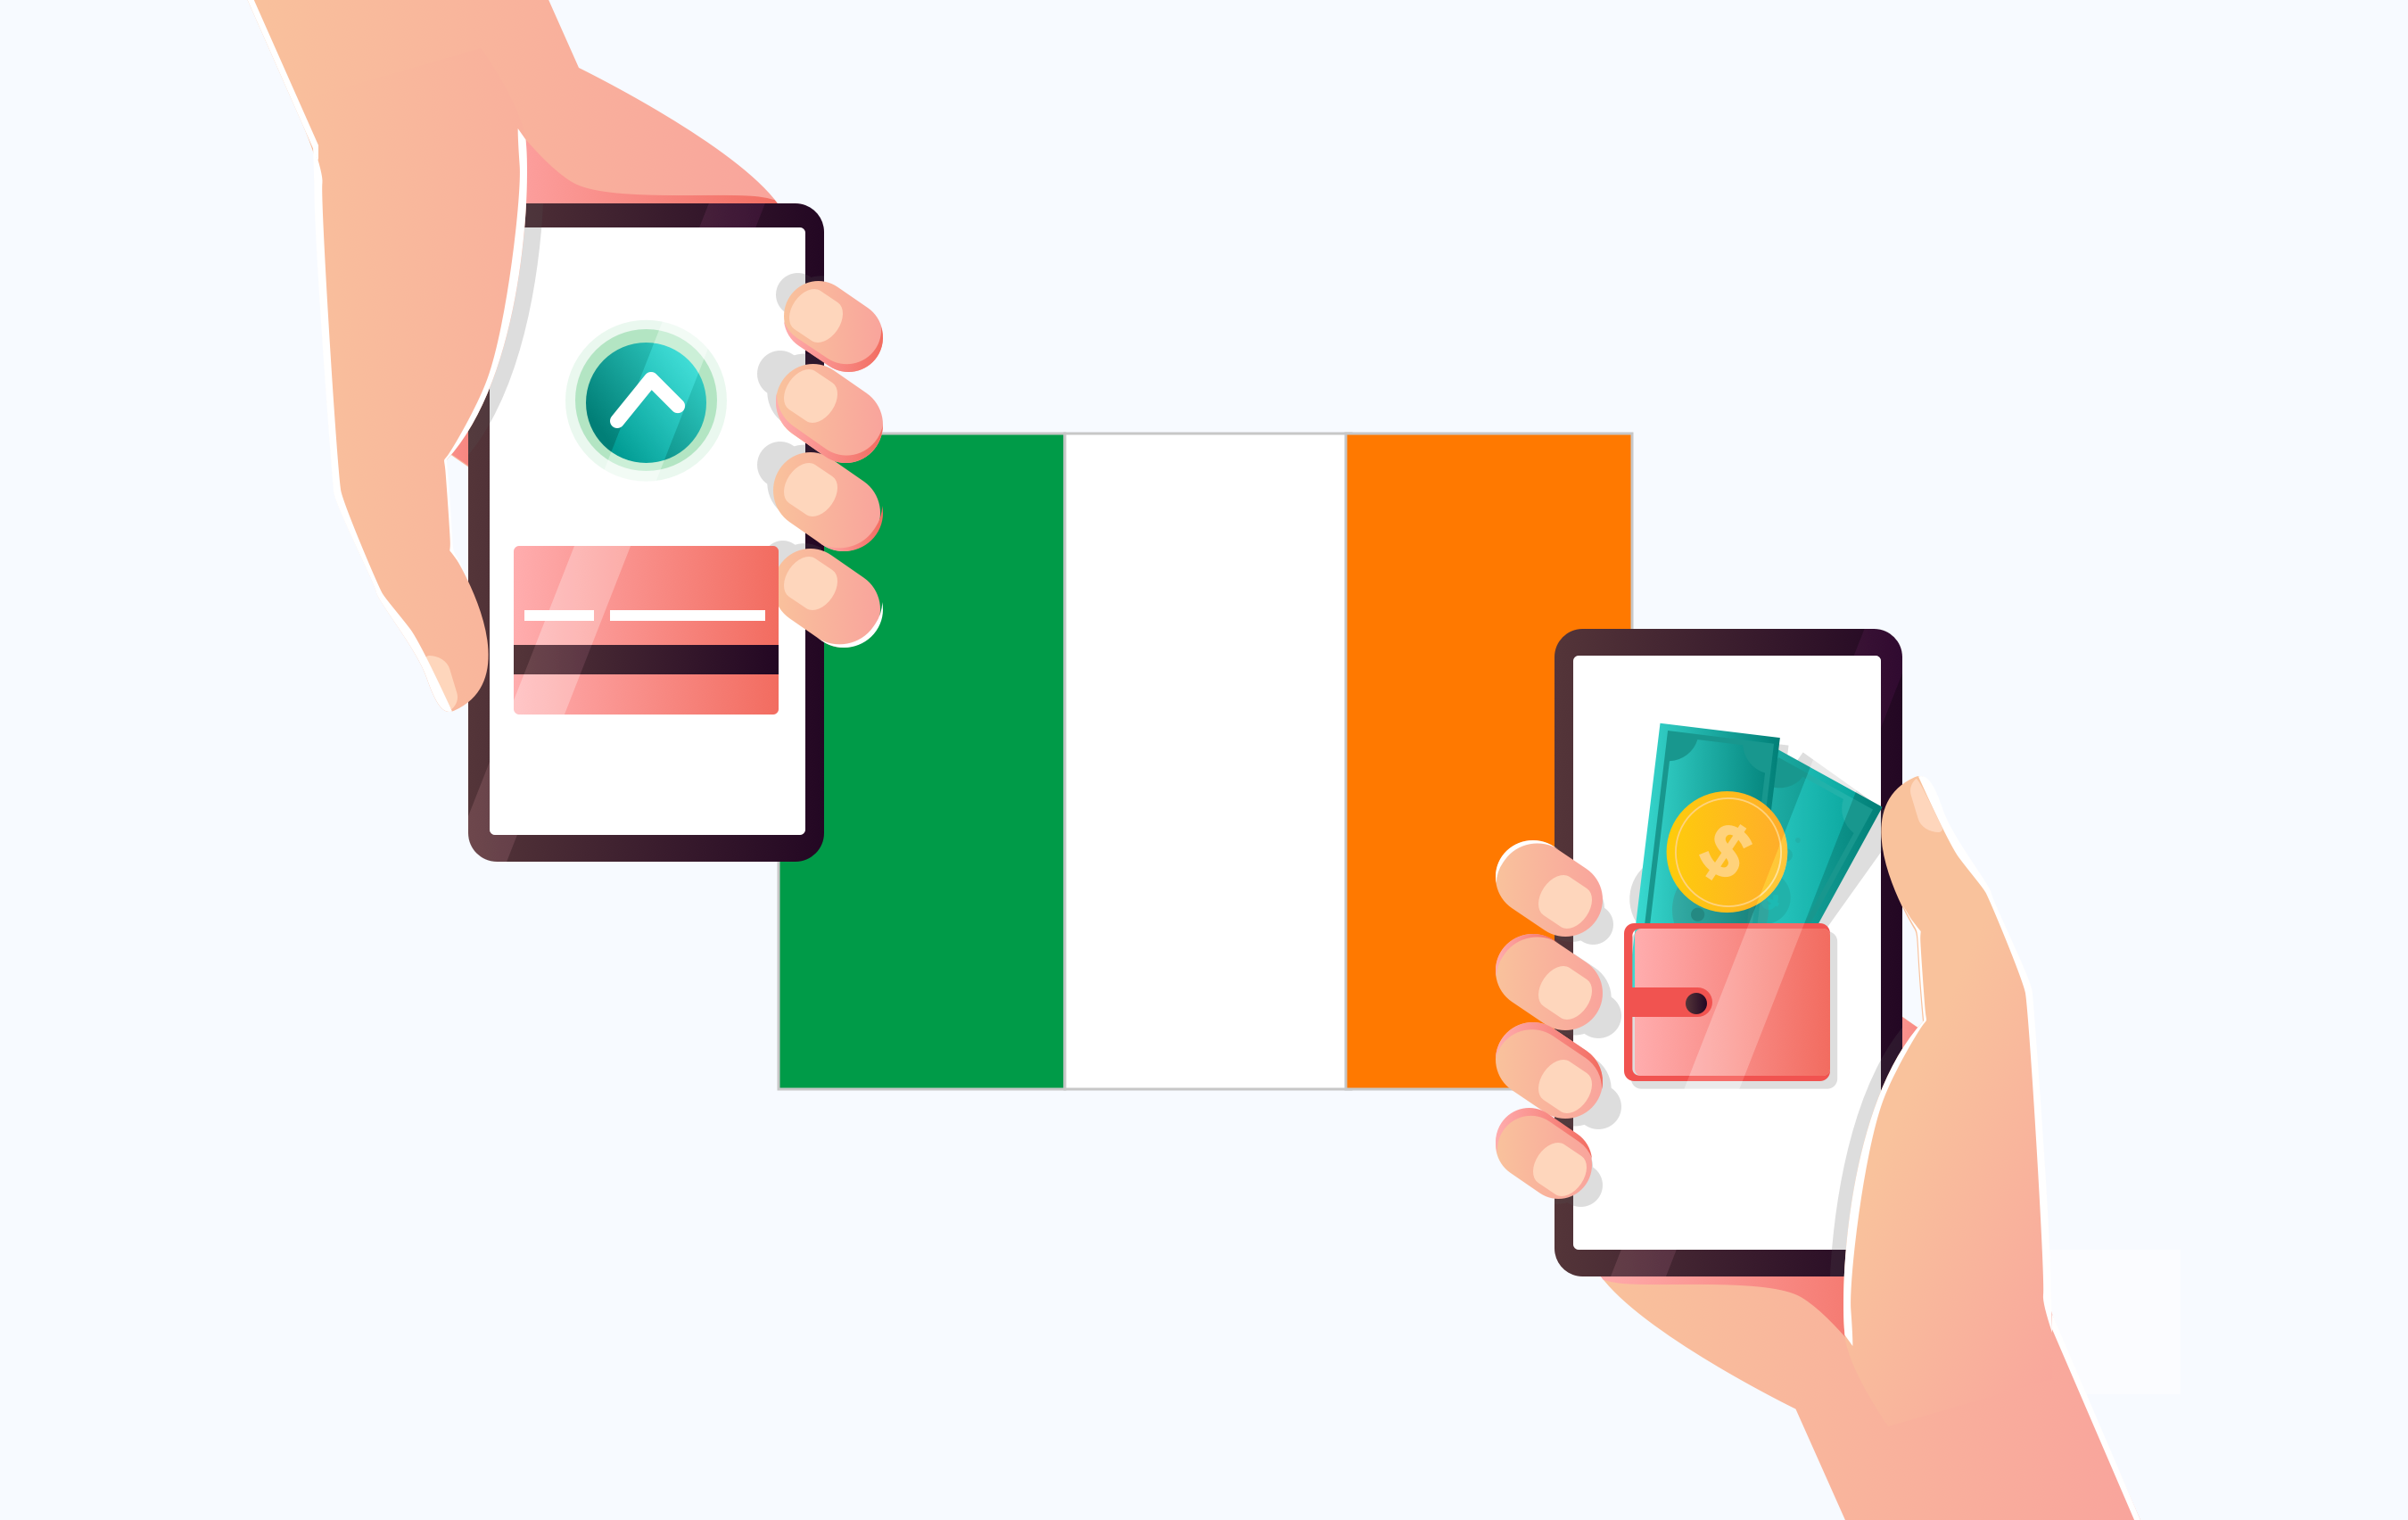 How to receive money in Ireland